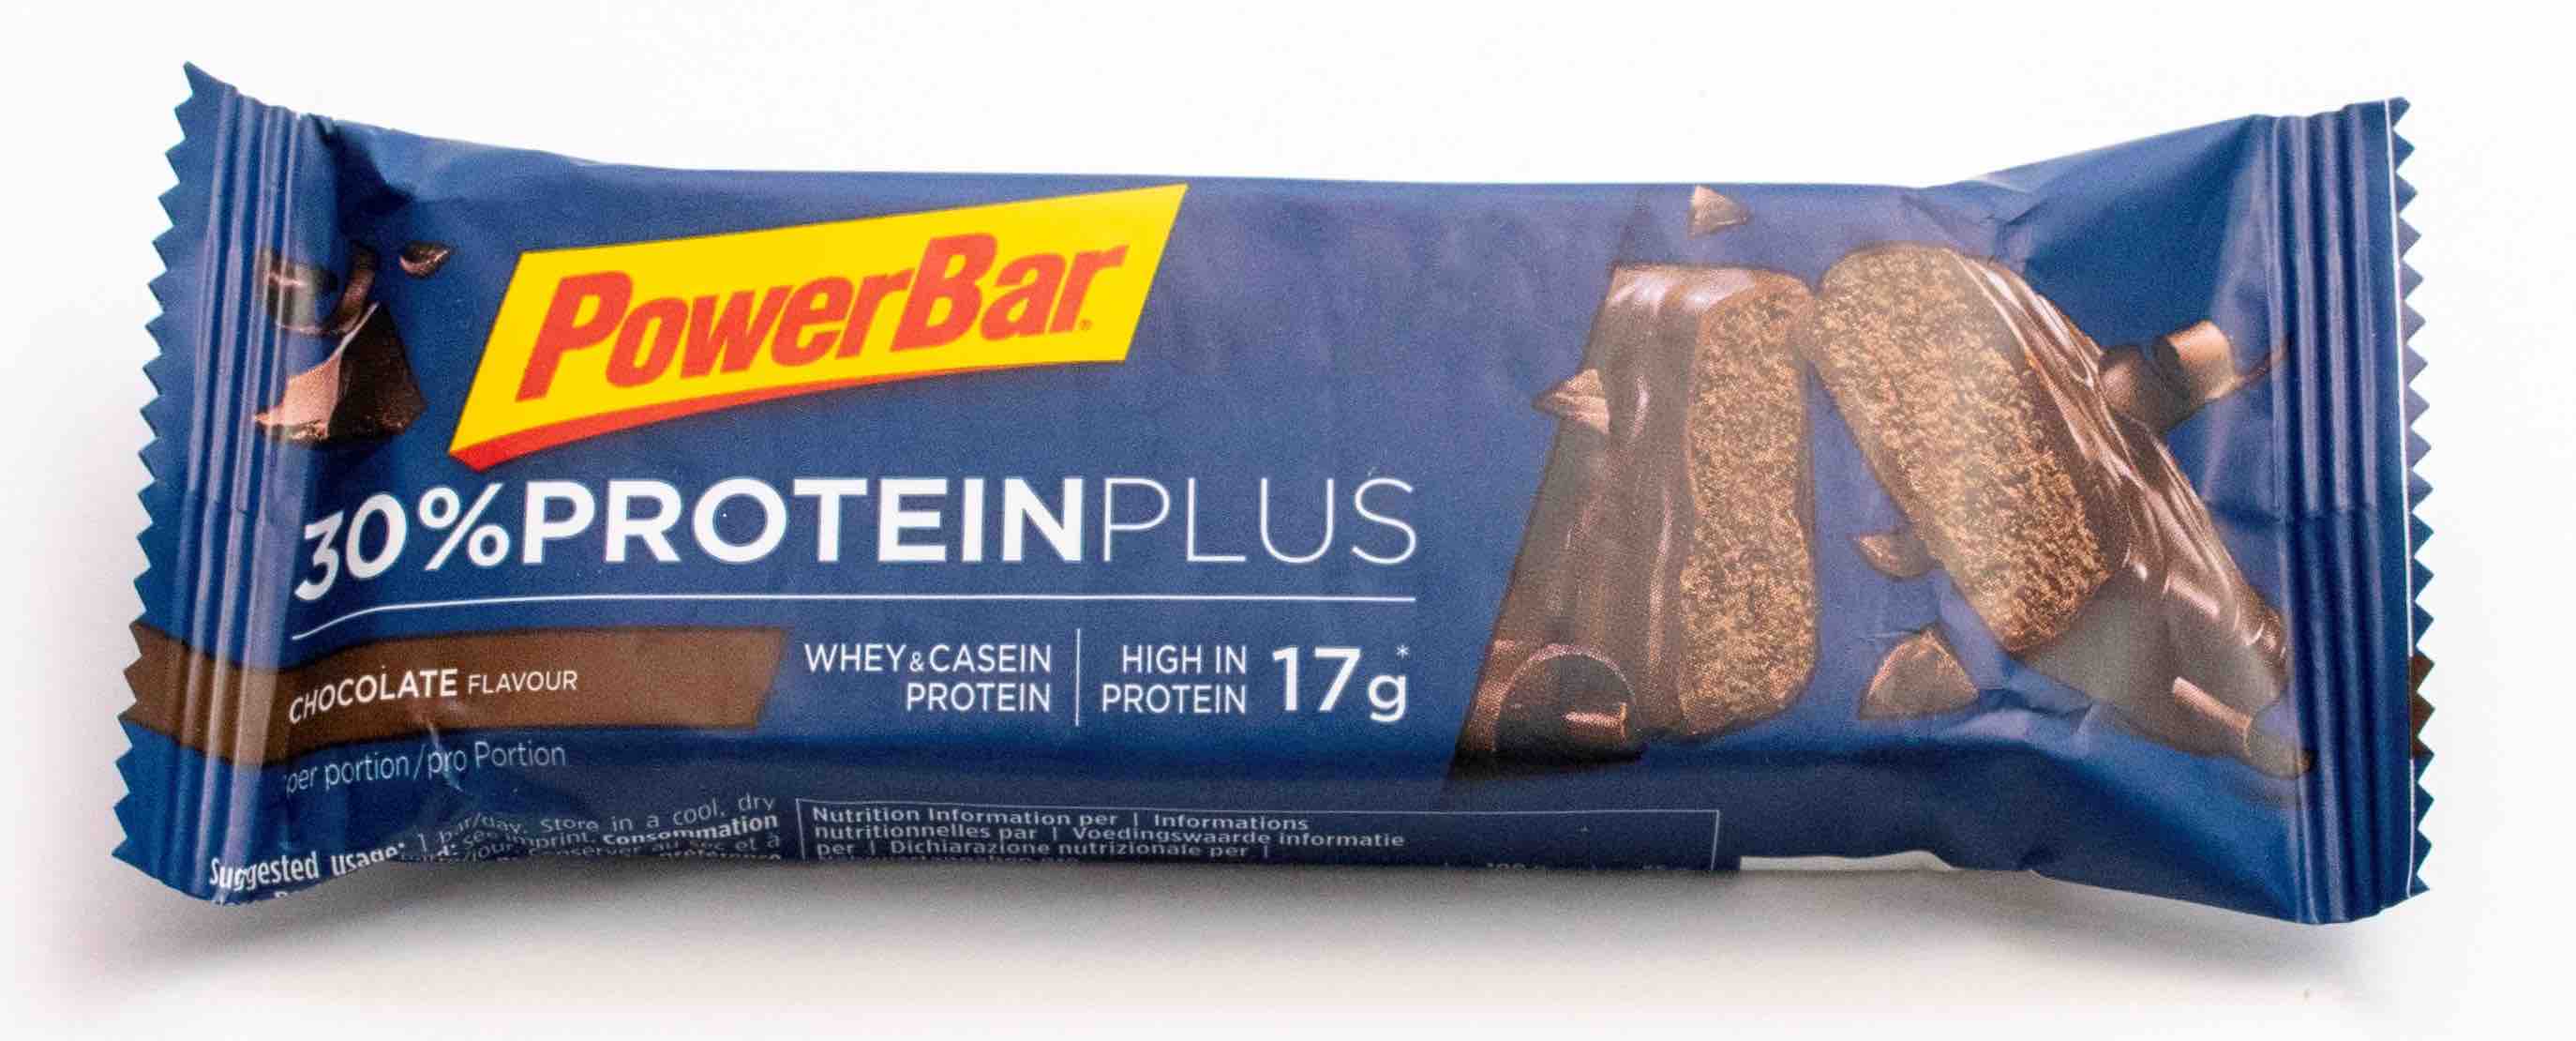 Protein Plus　パワーバー プロテインプラス・チョコレート